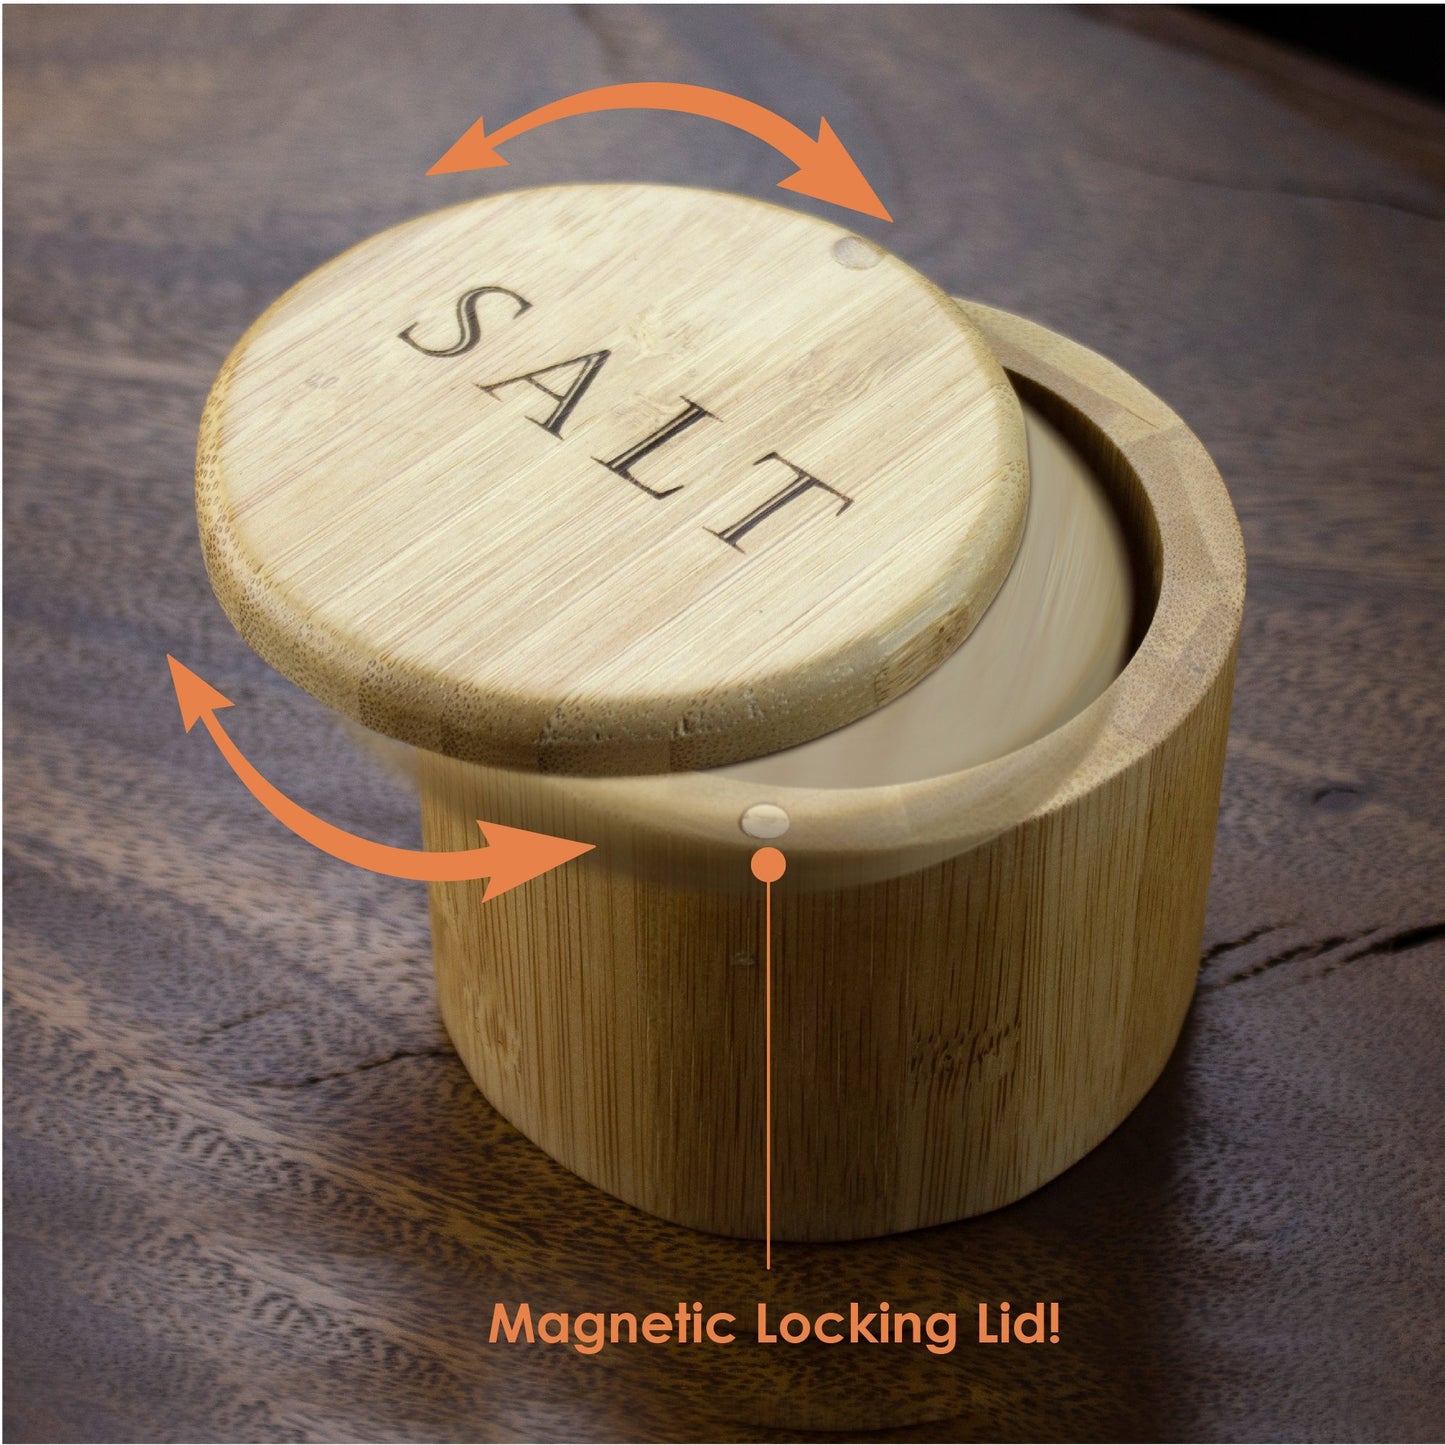 Salt Box with Magnetic Swivel Lid